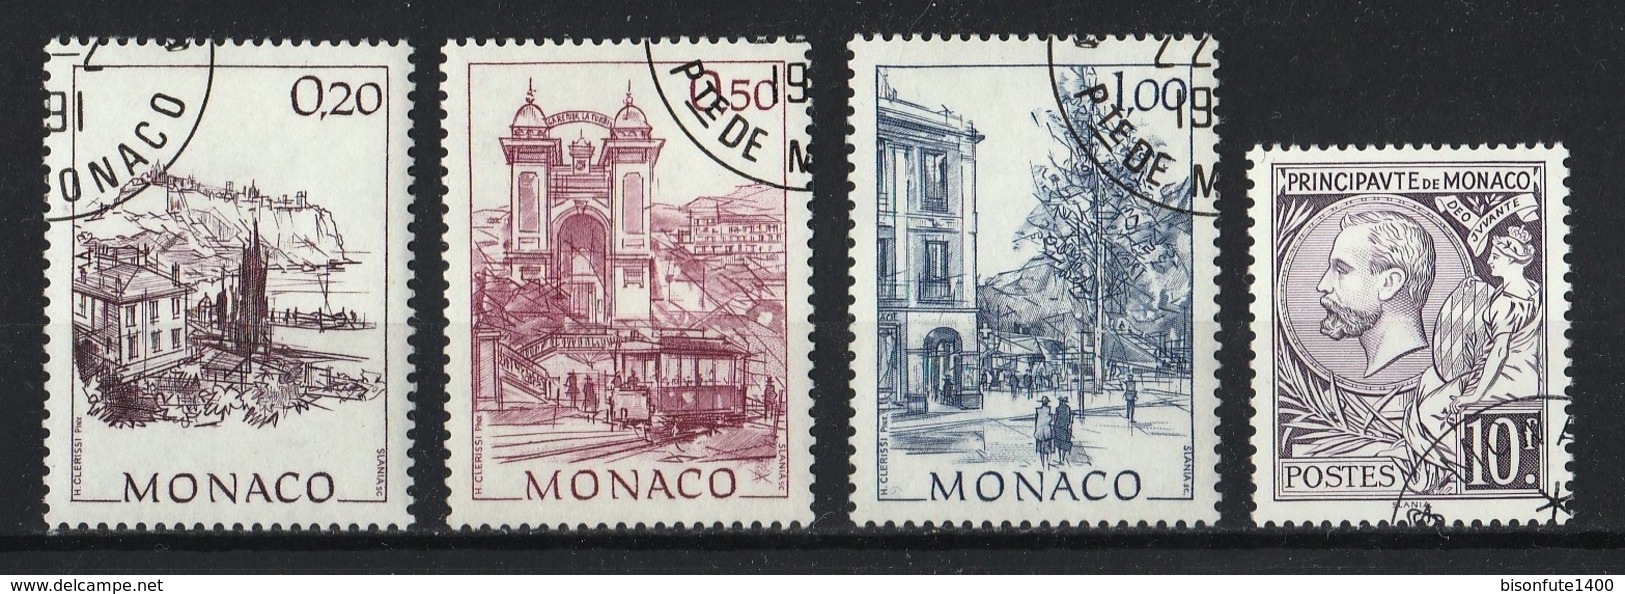 Monaco 1991 : Timbres Yvert & Tellier N° 1762 - 1764 - 1767 Et 1785 Oblitérés. - Usados